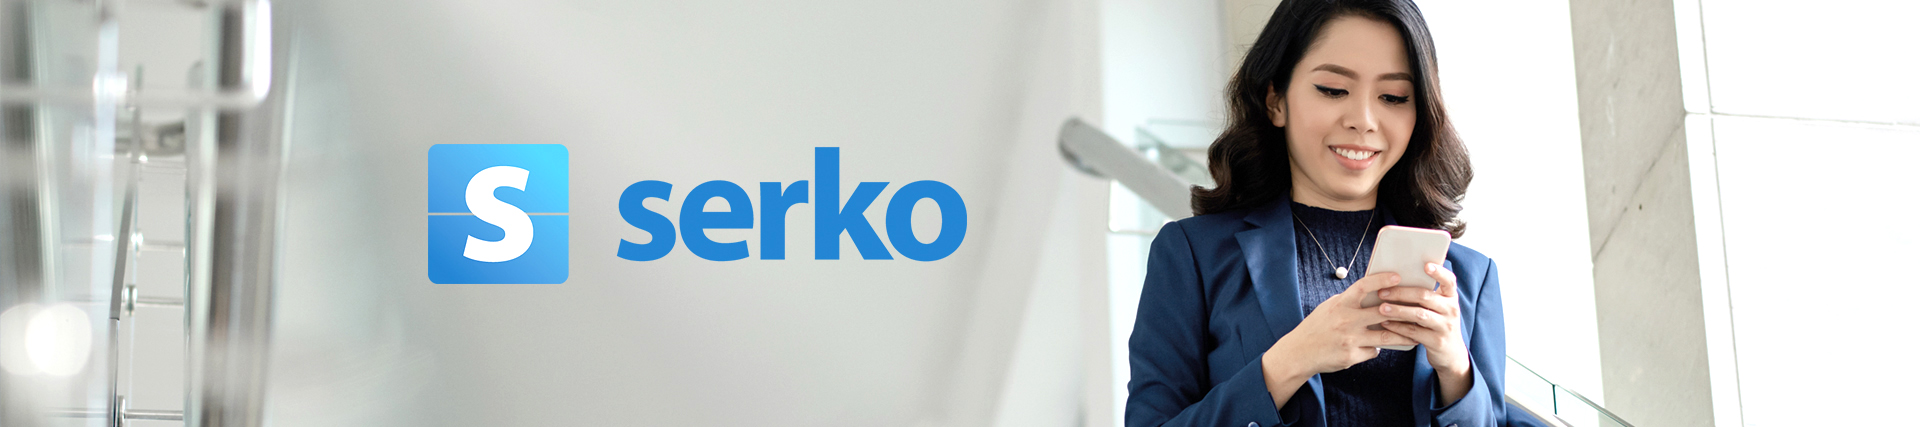 Serko Partnership